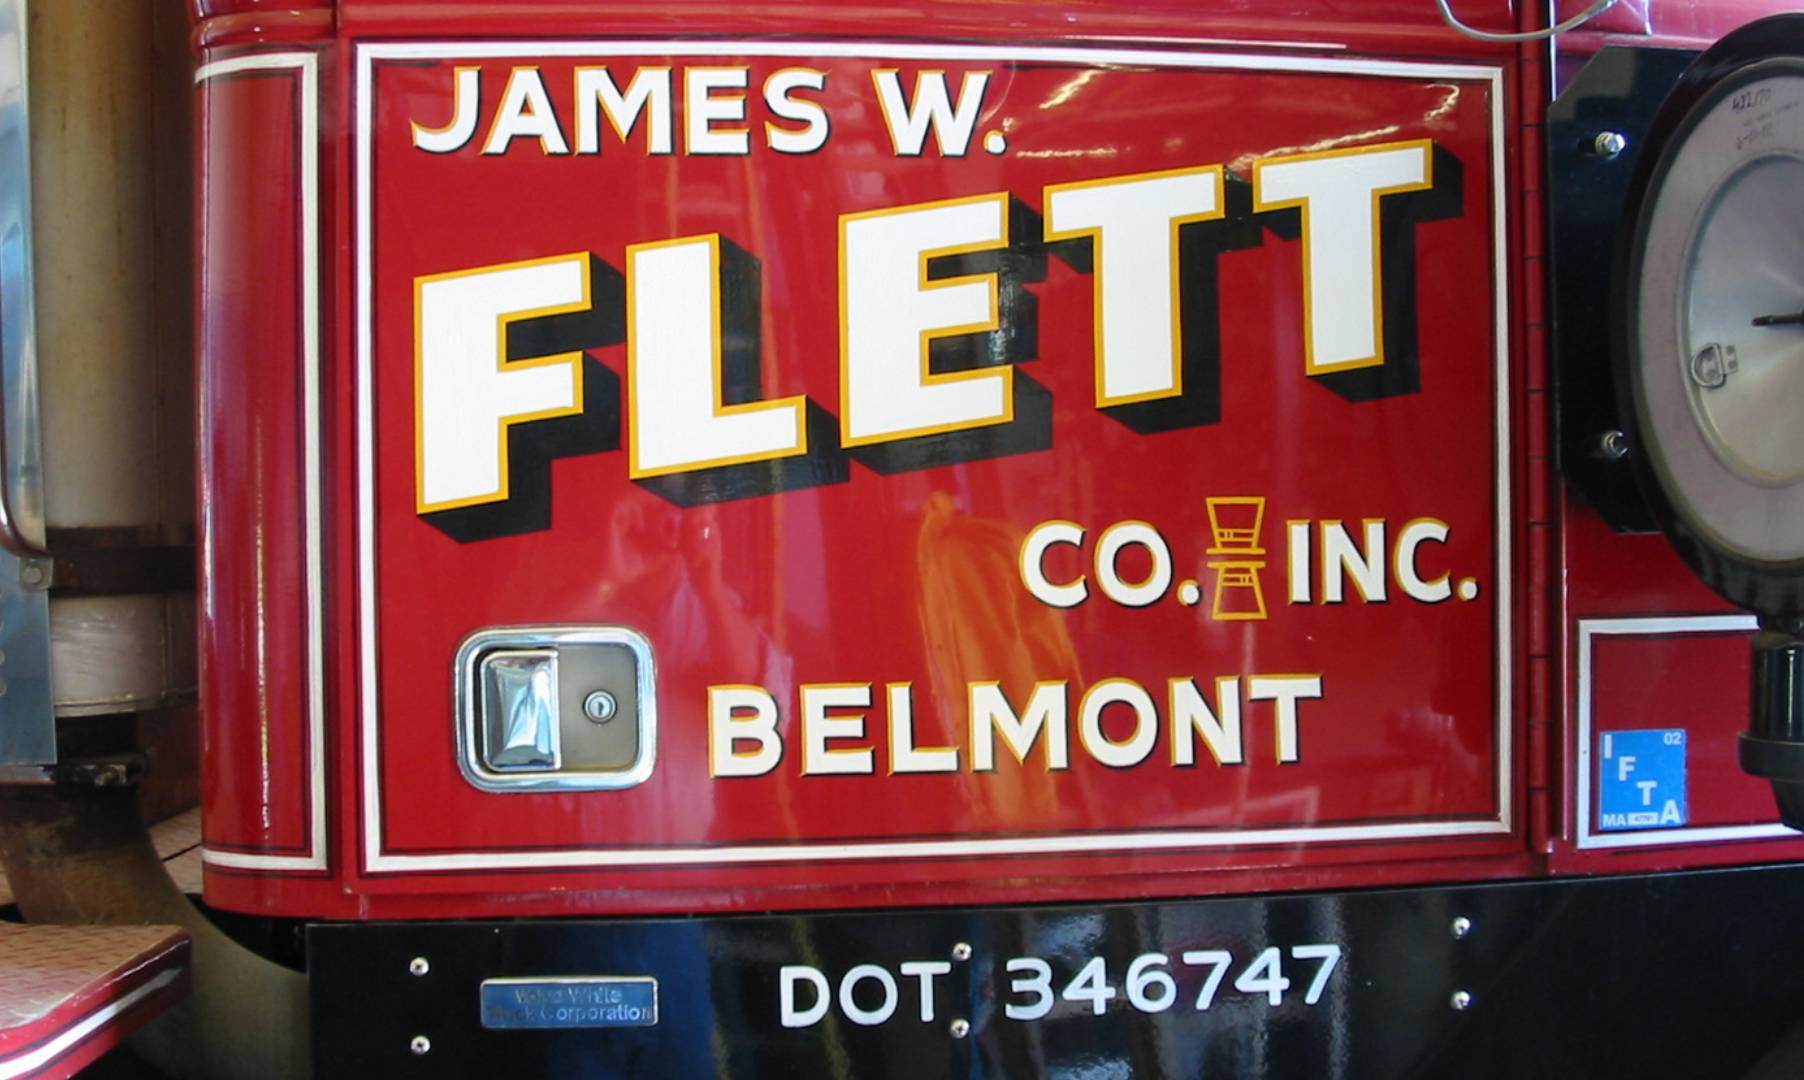 James W Fleet Co. Inc